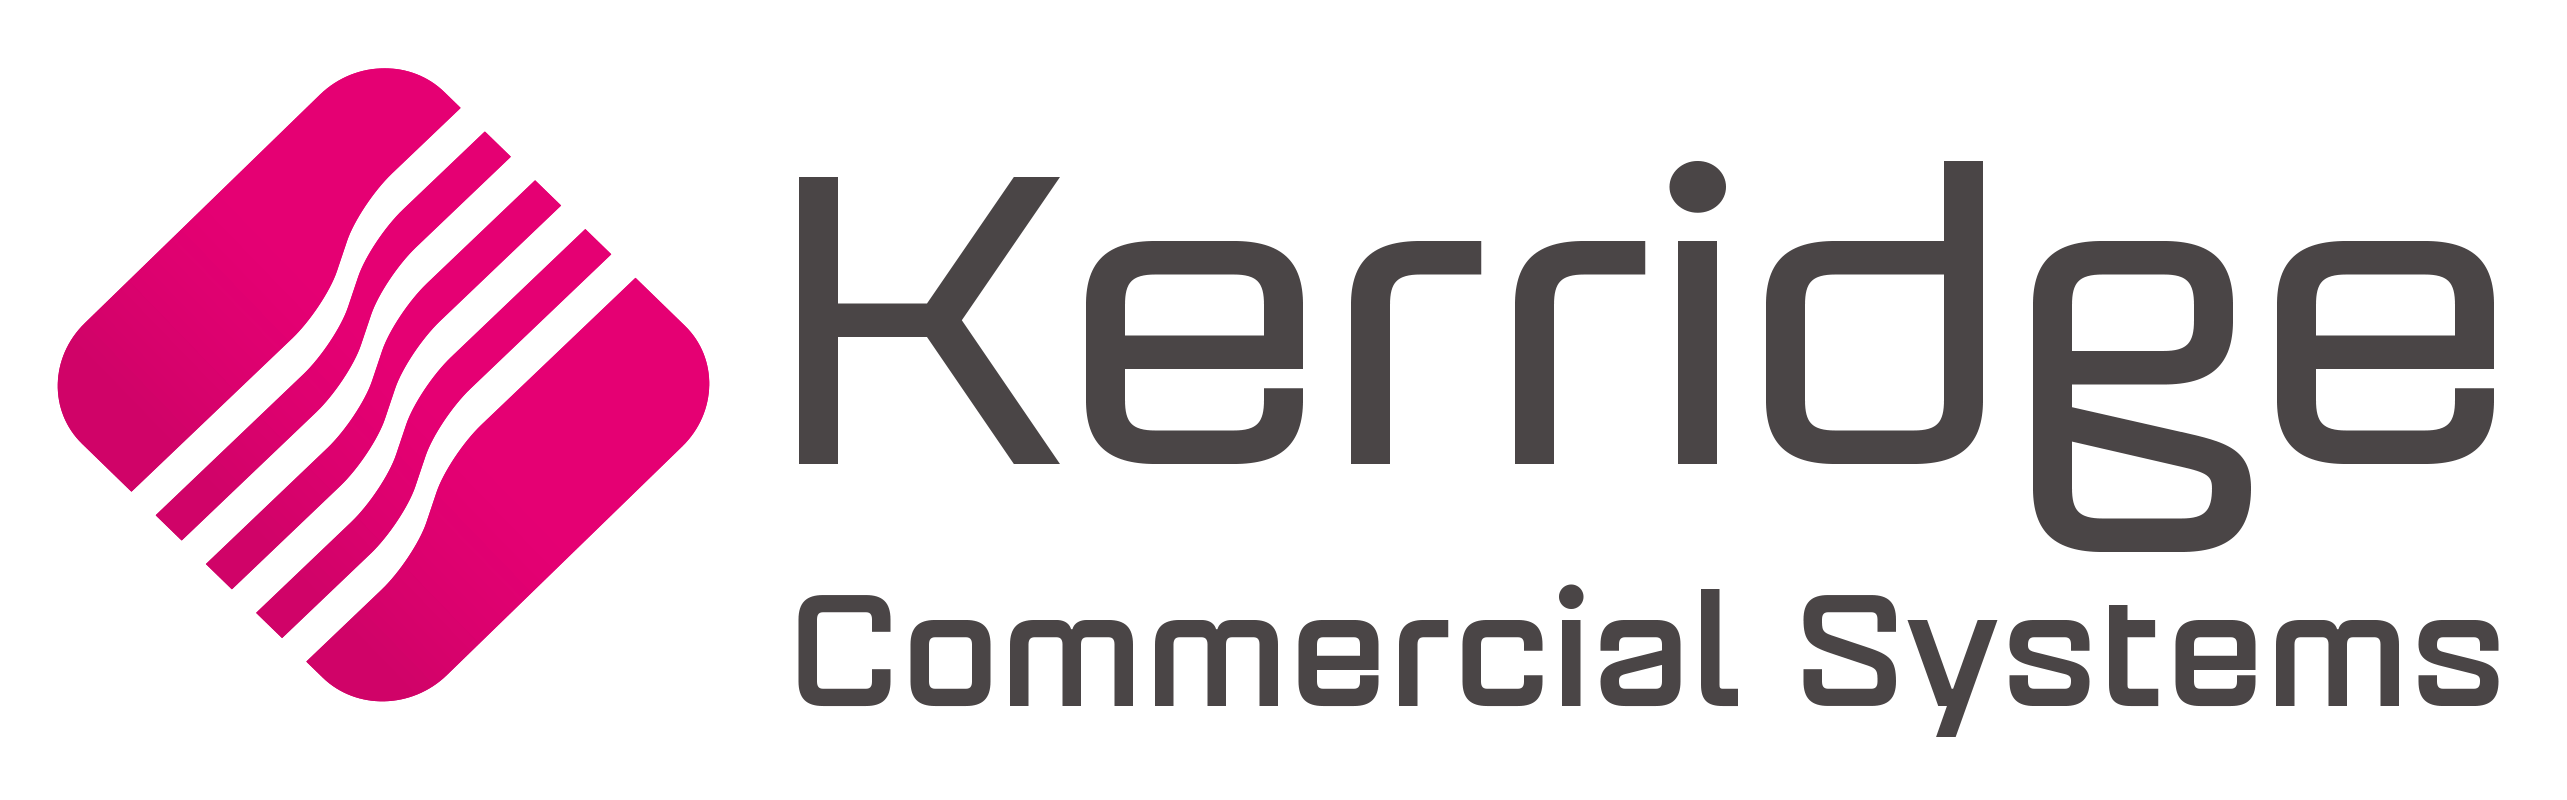 kerridge-commercial-systems